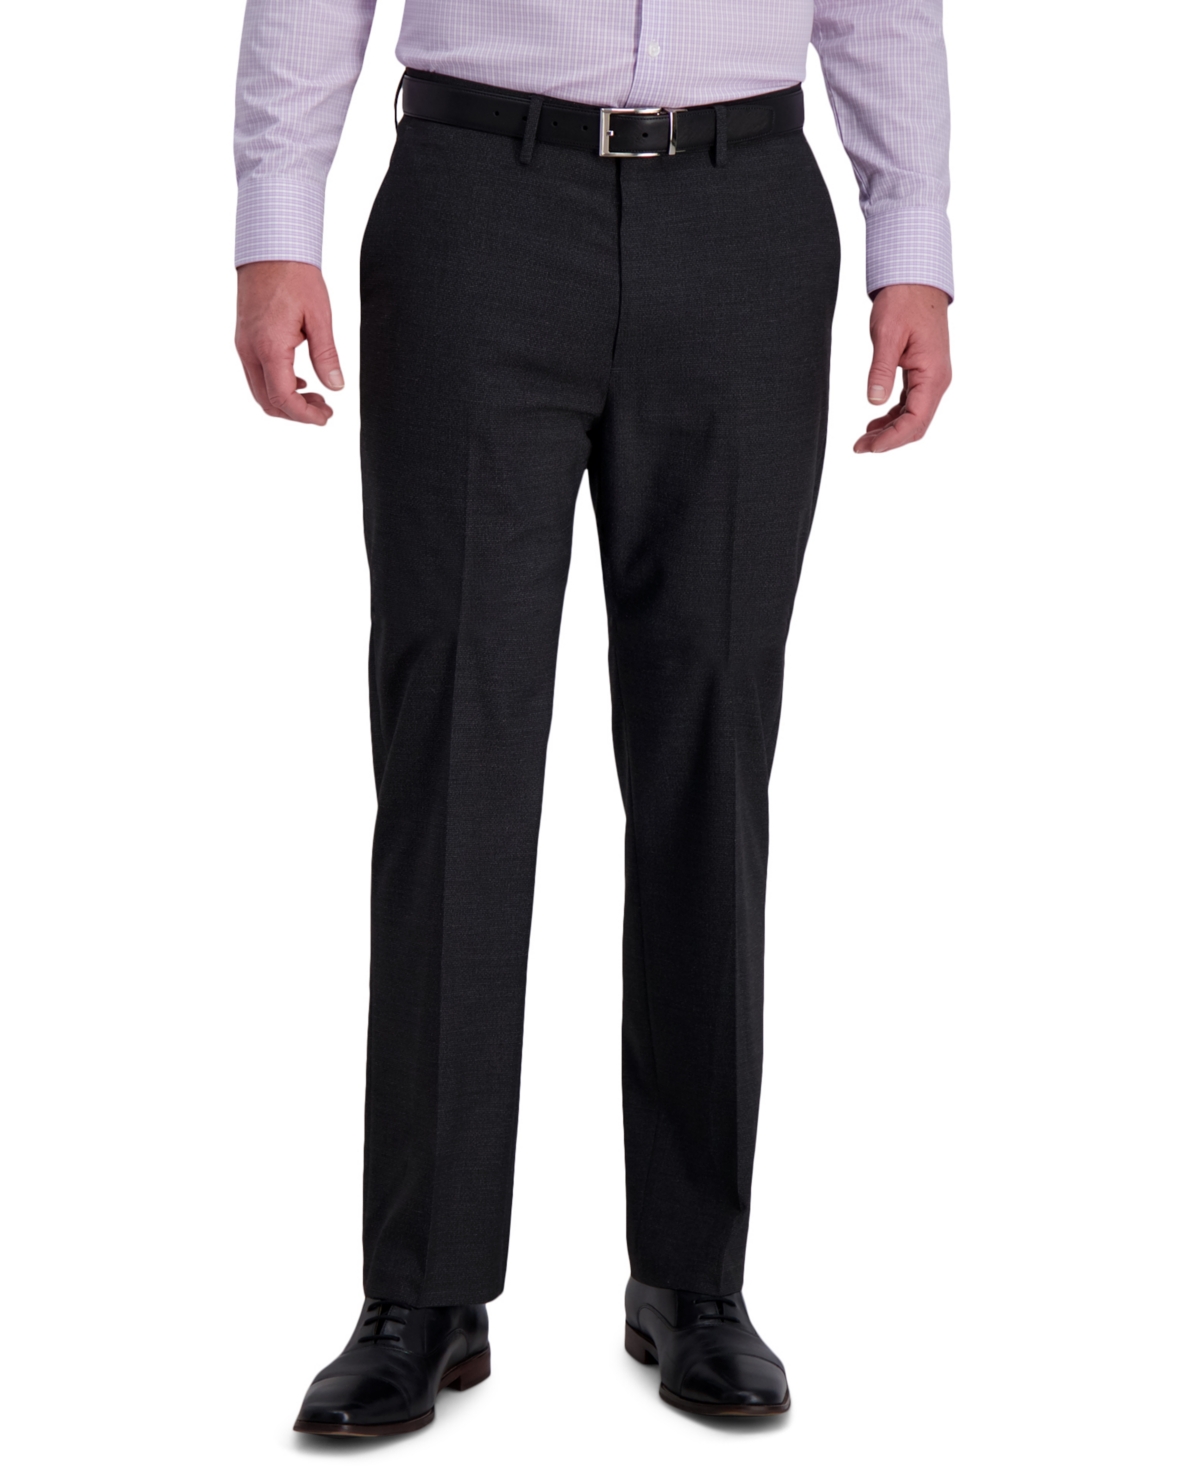 J.m. Haggar Men's 4-Way Stretch Textured Grid Classic Fit Flat Front Performance Dress Pant - Charcoal